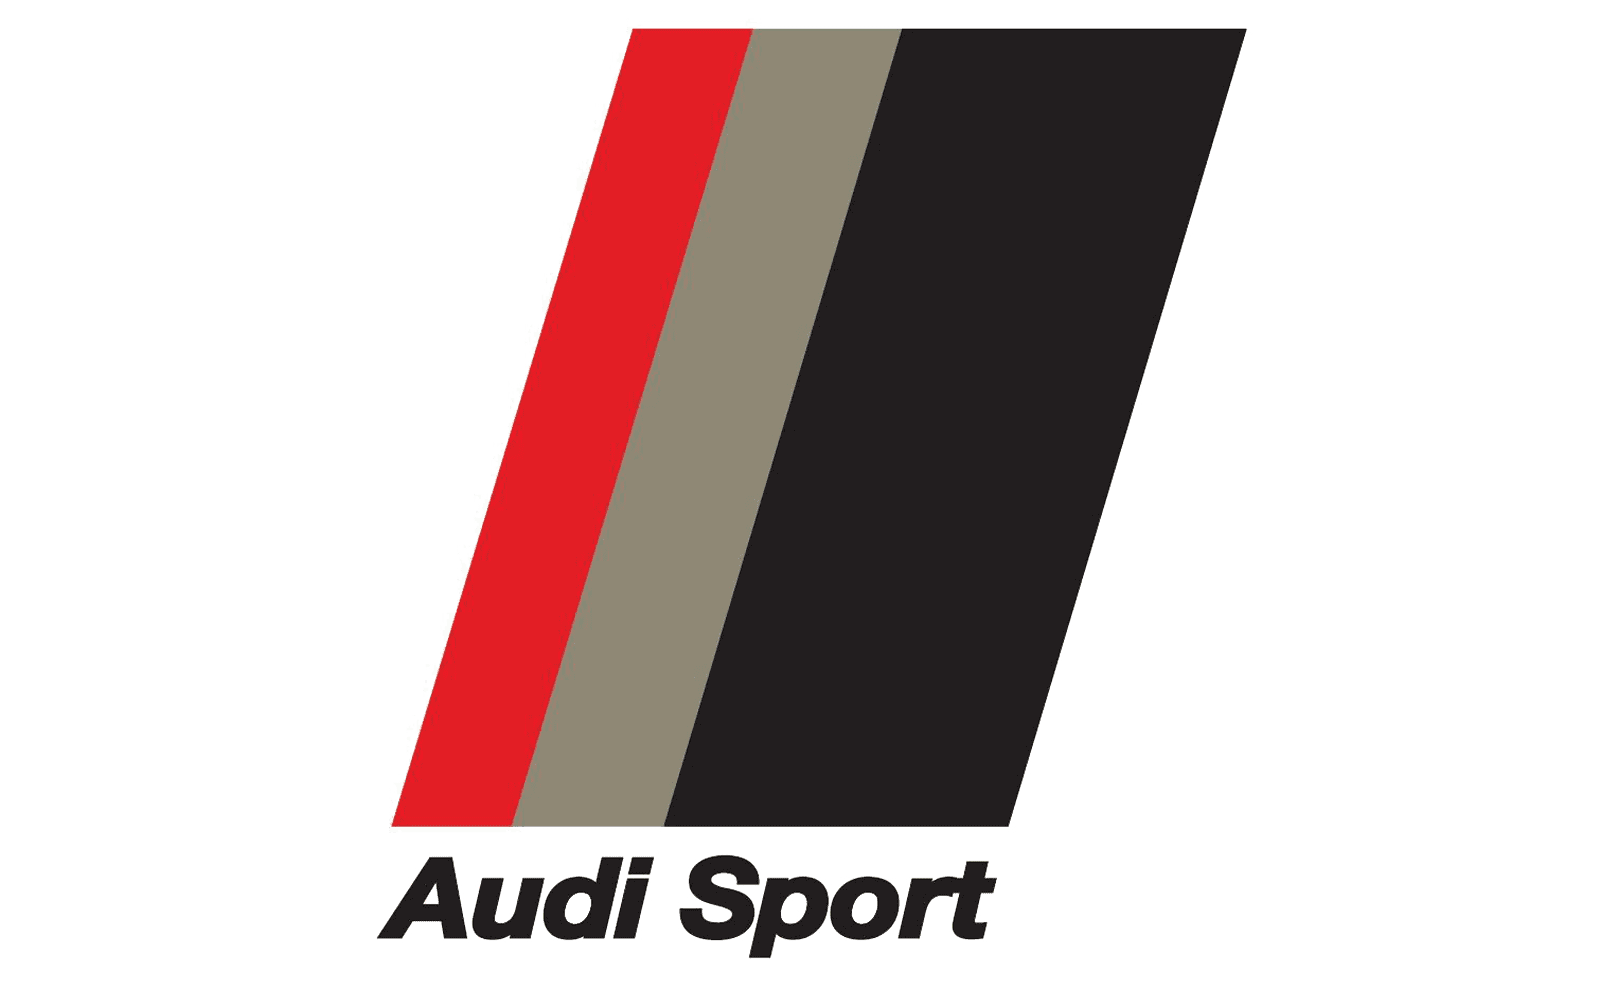 Audi gets EU court backing over trademark dispute | Automotive News Europe